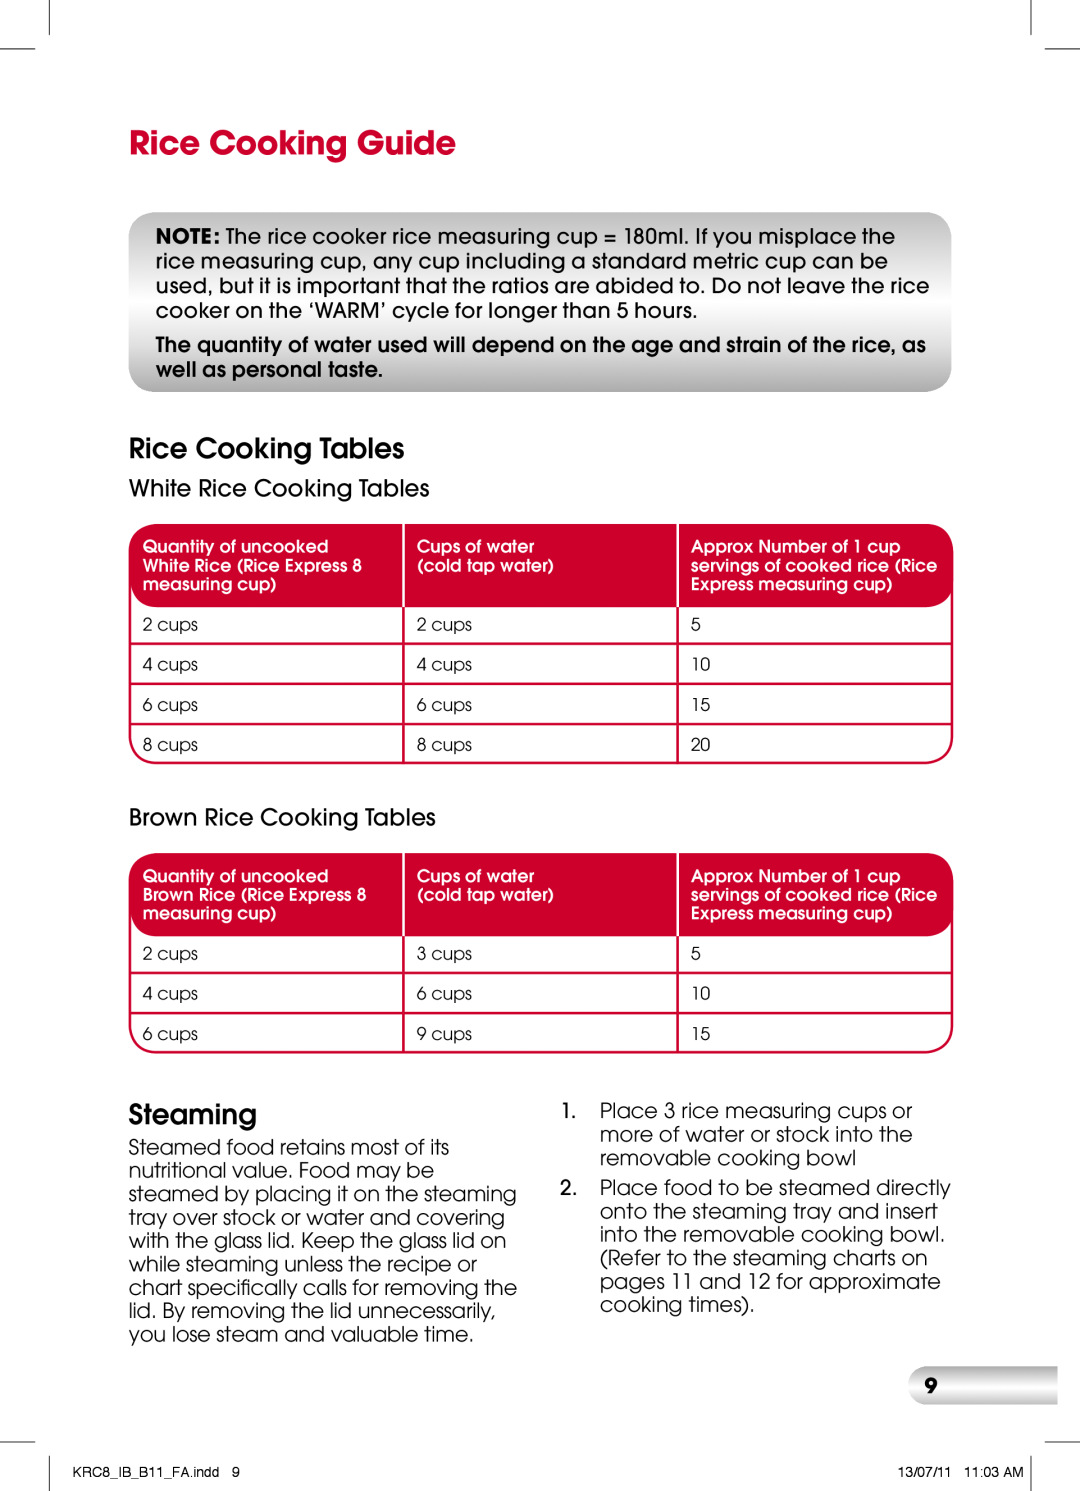 Kambrook KRC8 manual Rice Cooking Guide, Steaming, White Rice Cooking Tables, Brown Rice Cooking Tables 